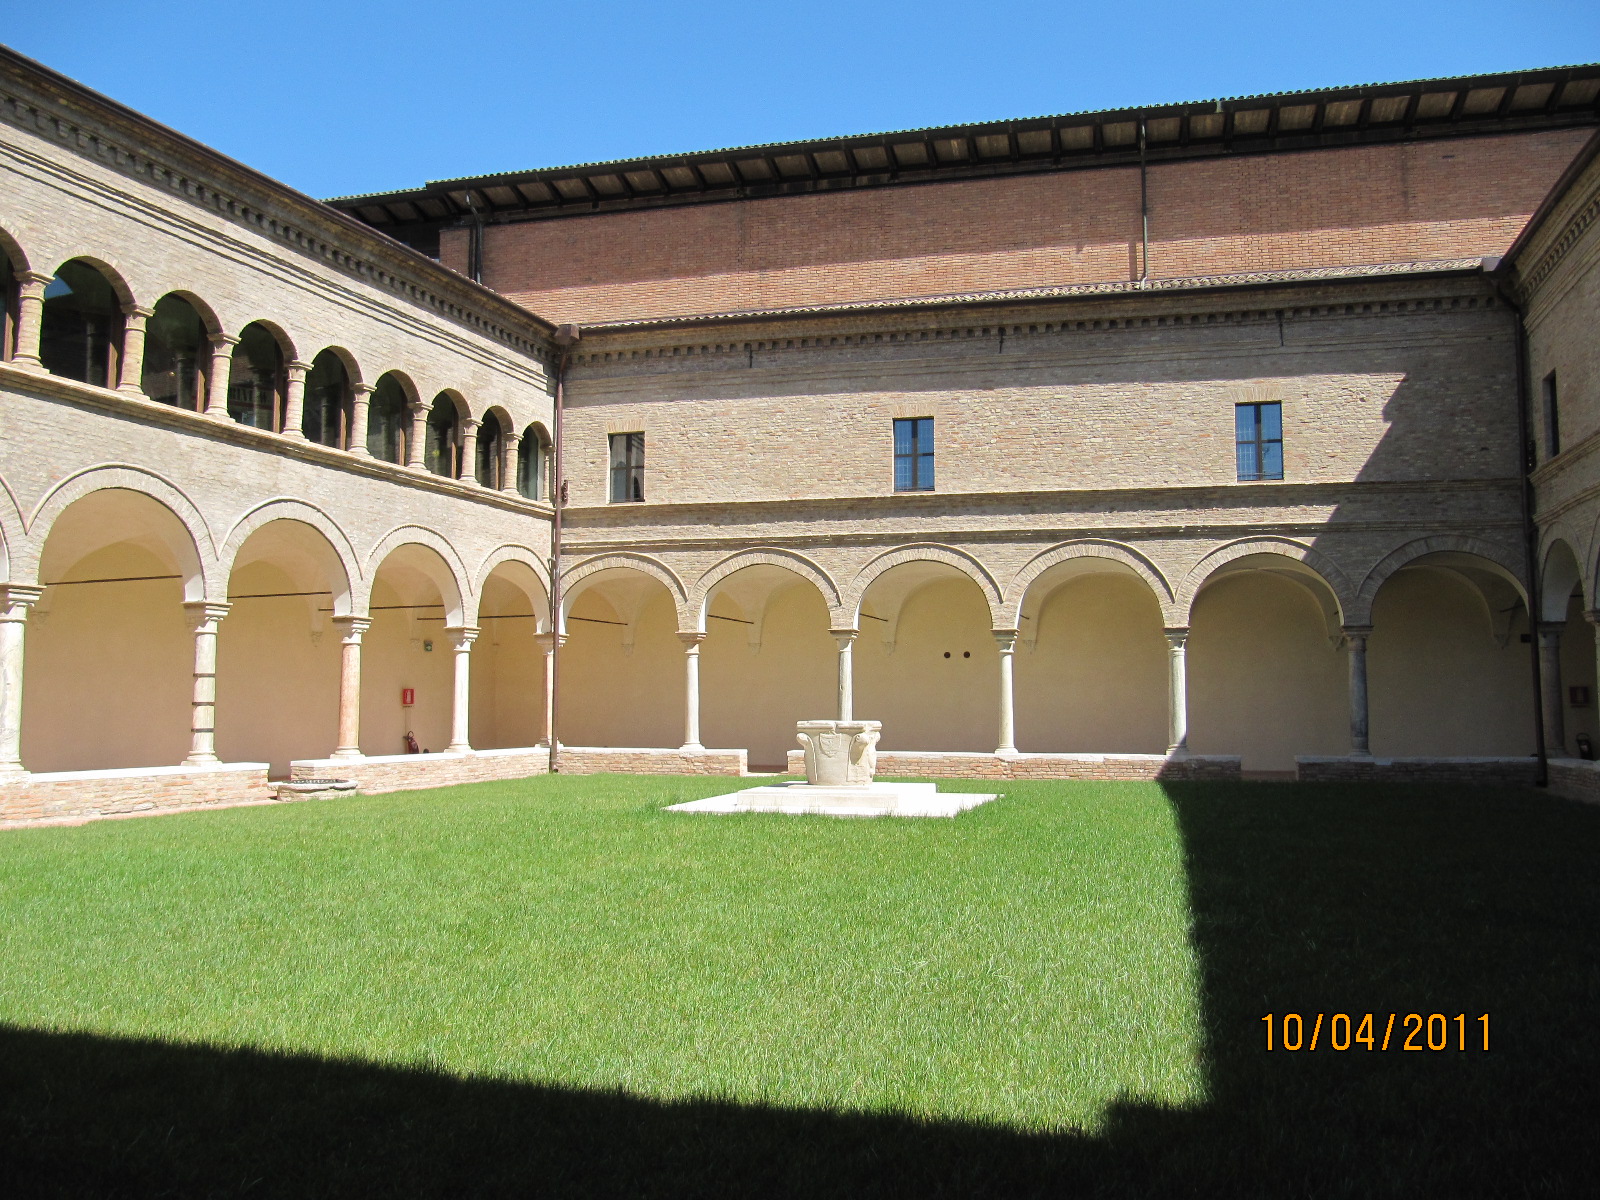 foto: https://upload.wikimedia.org/wikipedia/commons/d/d3/Chiostro_vicino_Tomba_Dante.jpg